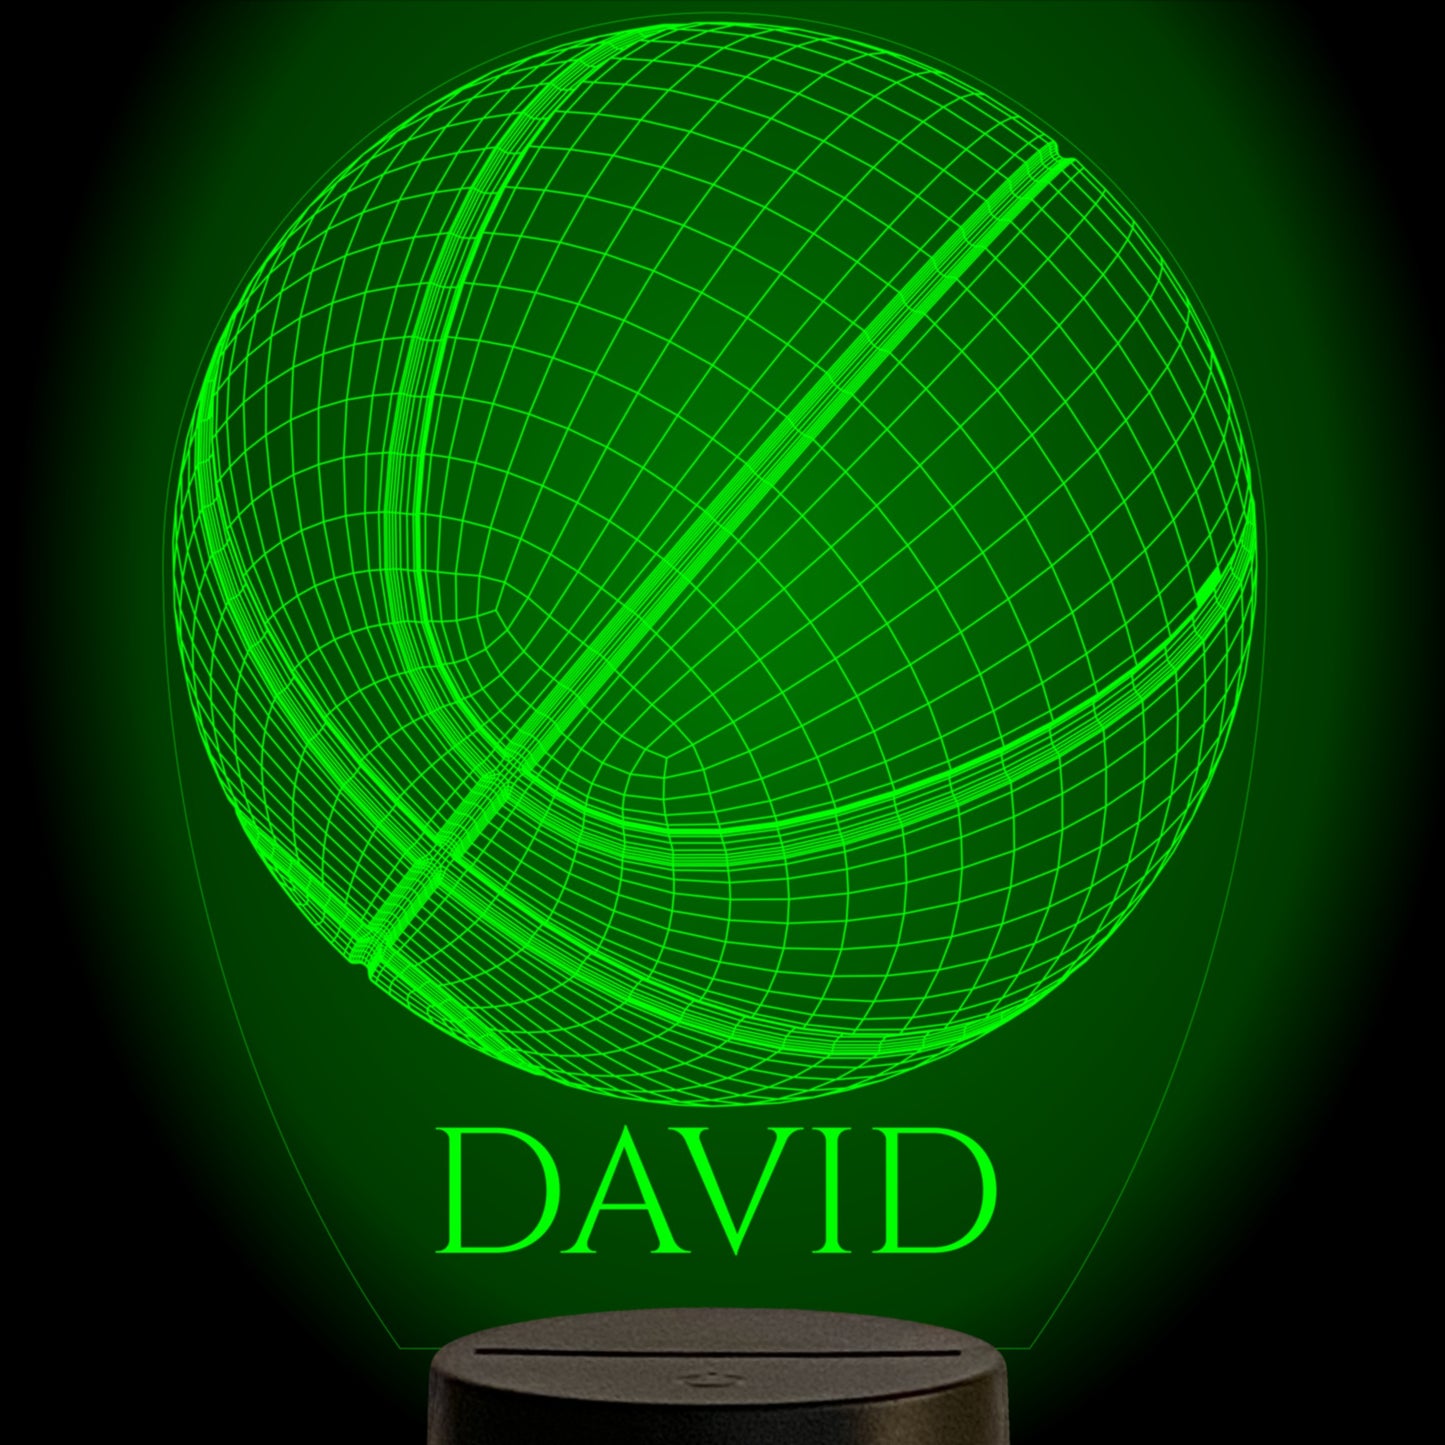 personalizedd illusion basketball night light. Shown in green.